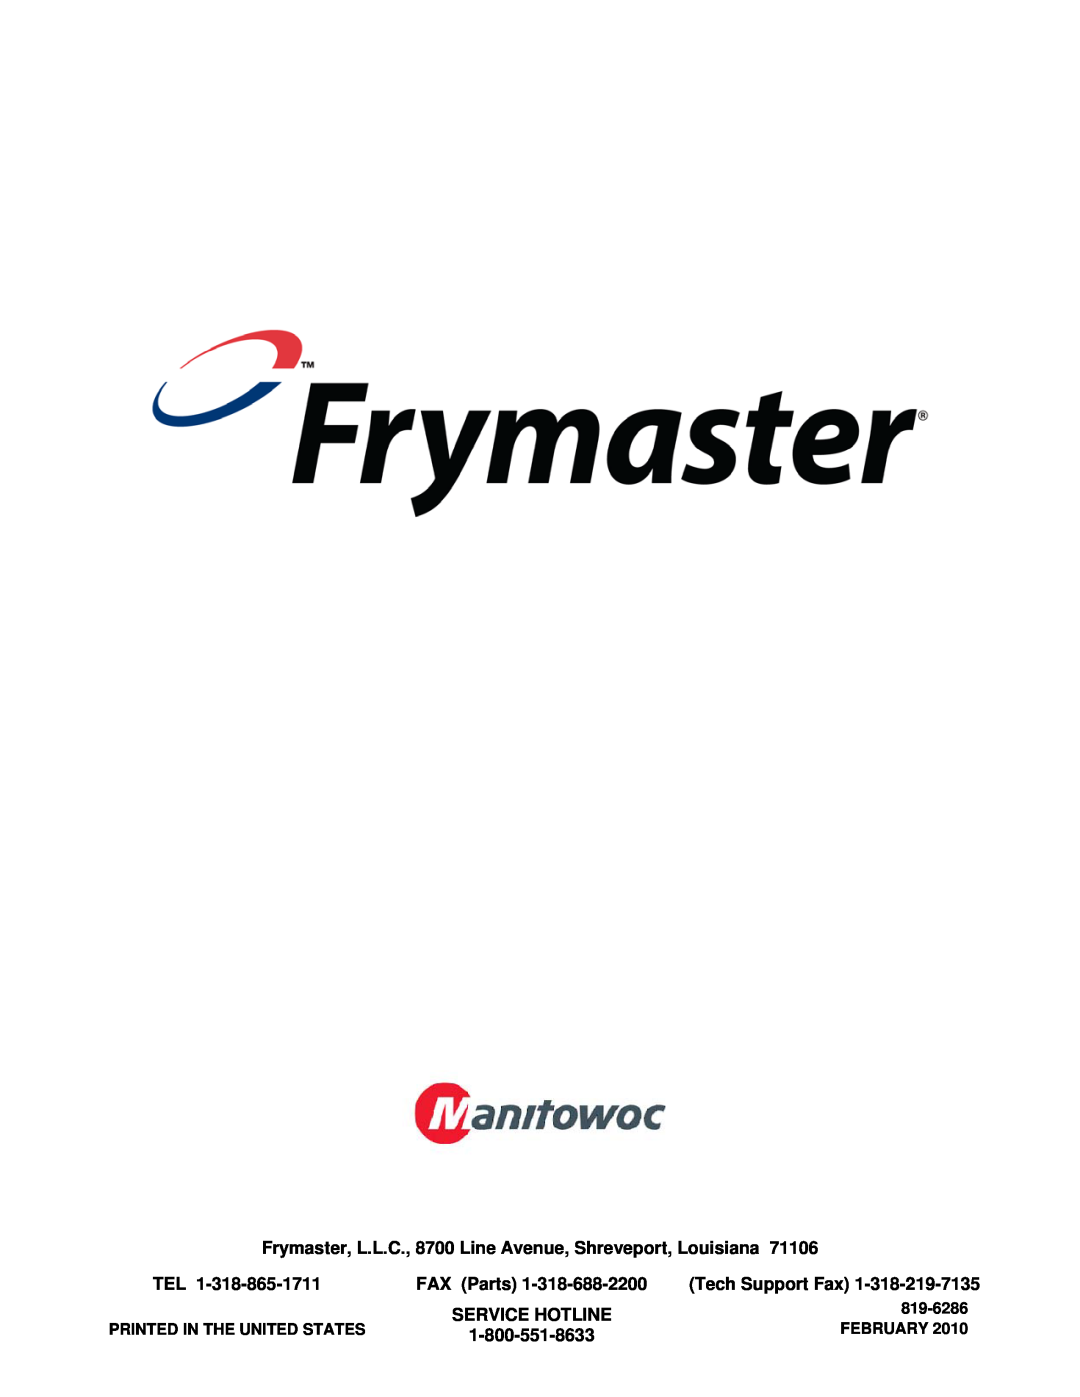 Frymaster BIGLA30 Frymaster, L.L.C., 8700 Line Avenue, Shreveport, Louisiana, FAX Parts, Tech Support Fax, Service Hotline 